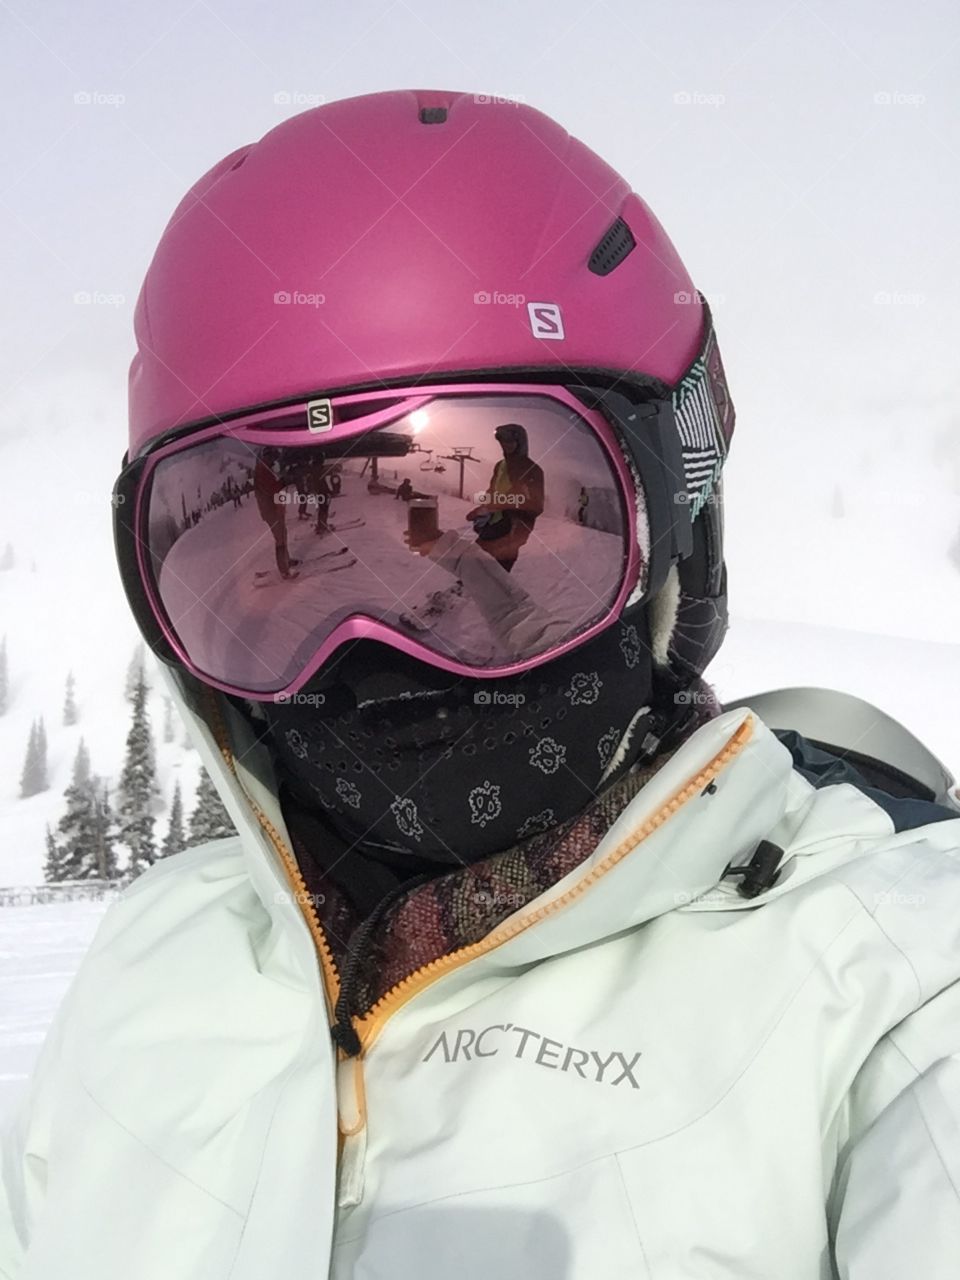 Snowboarding, snowboarder, pink, pink helmet, goggles, ski, ski jacket, arcteryx, ski jacket, reflection, pink lady, winter, snow, snowing, ski resort, portrait, selfie 